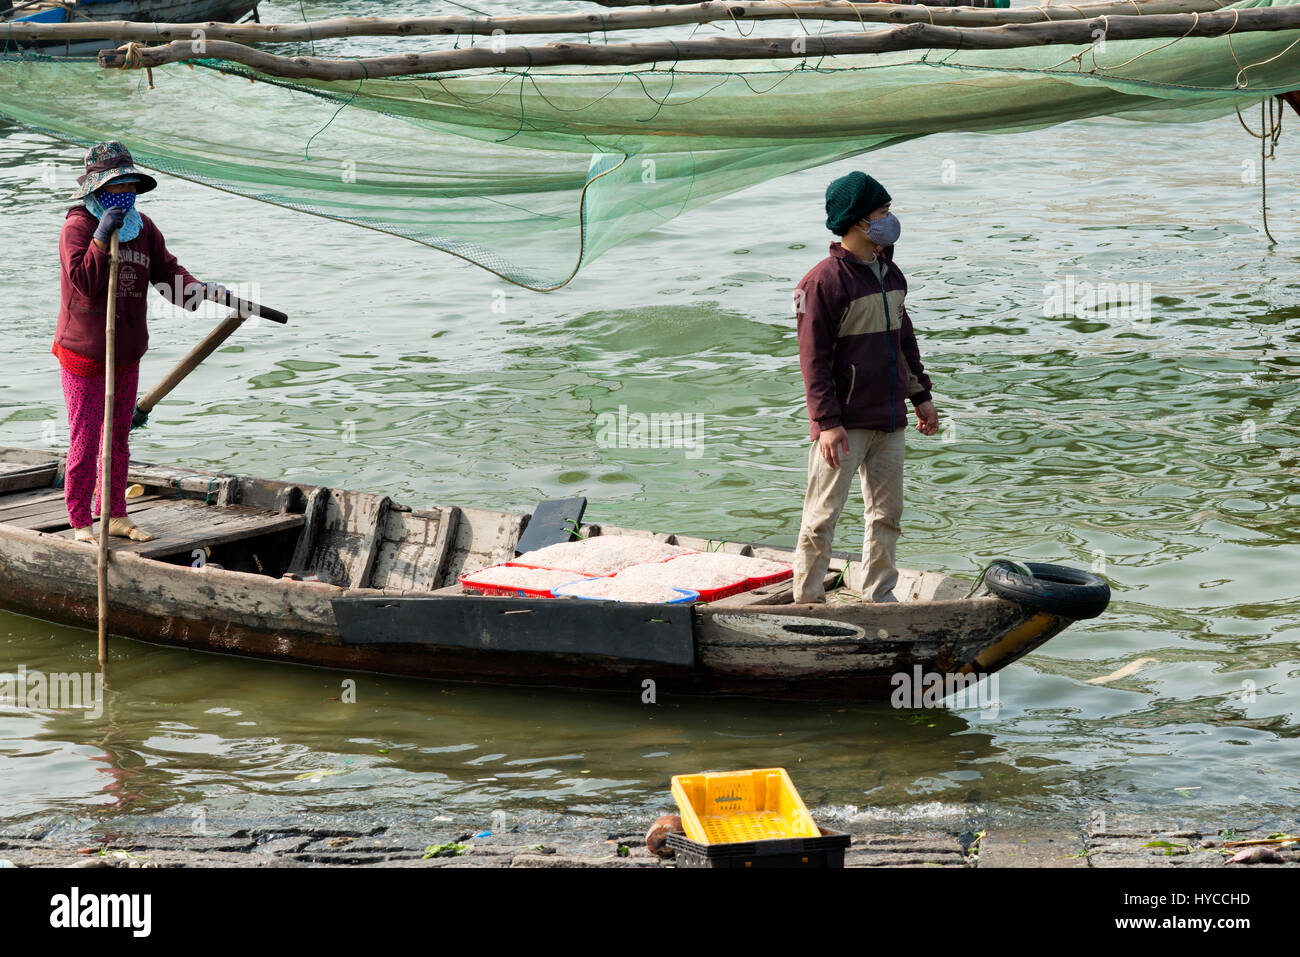 Vietnamese couple bringing buckets with shrimp catch to the dockside. December 26, 2013 - Da Nang, South Vietnam Stock Photo